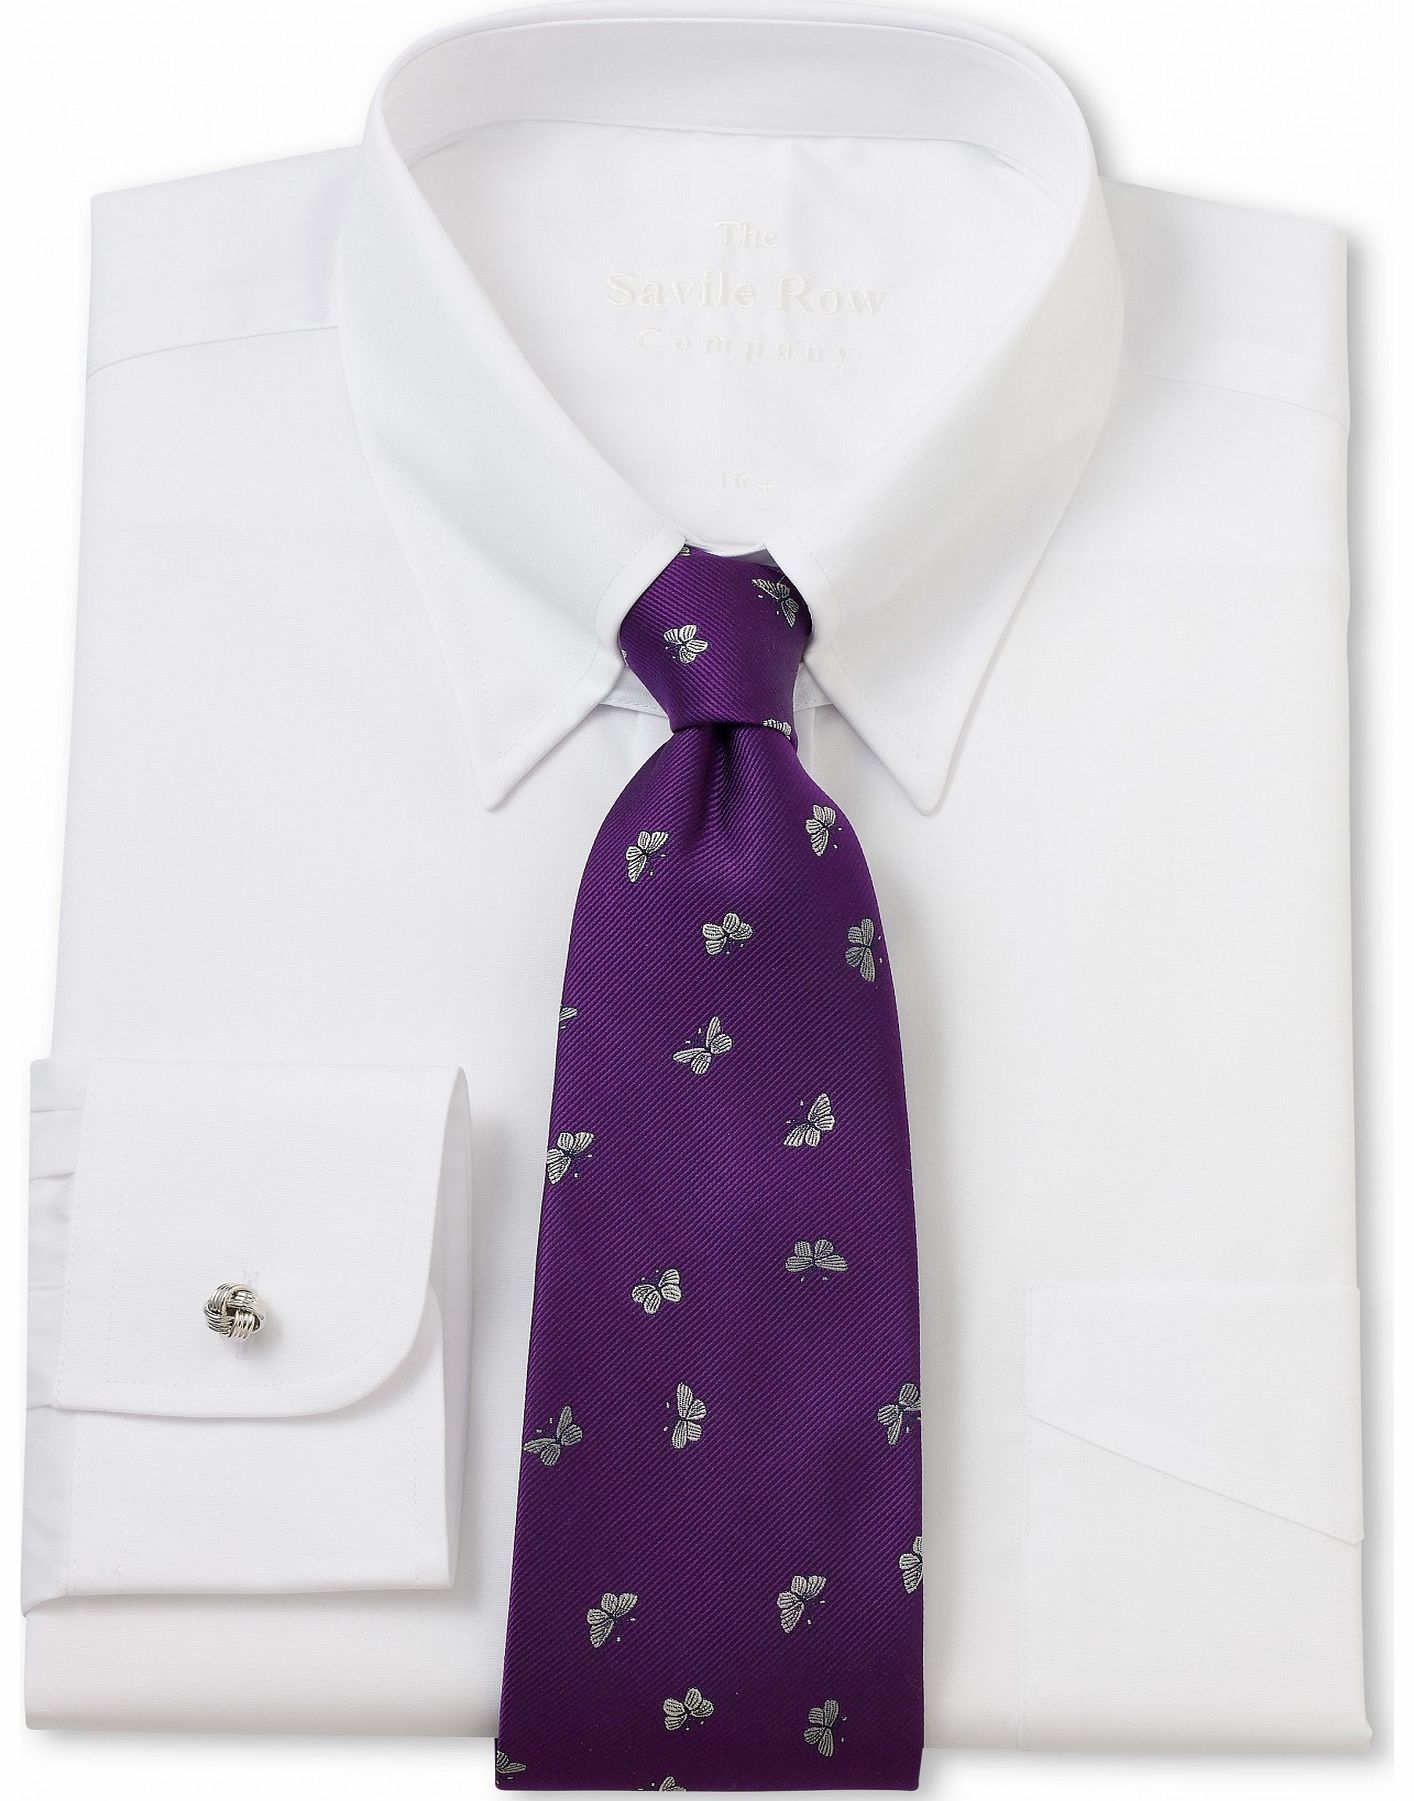 Savile Row Company White Poplin Tab Collar Classic Fit Shirt 15``